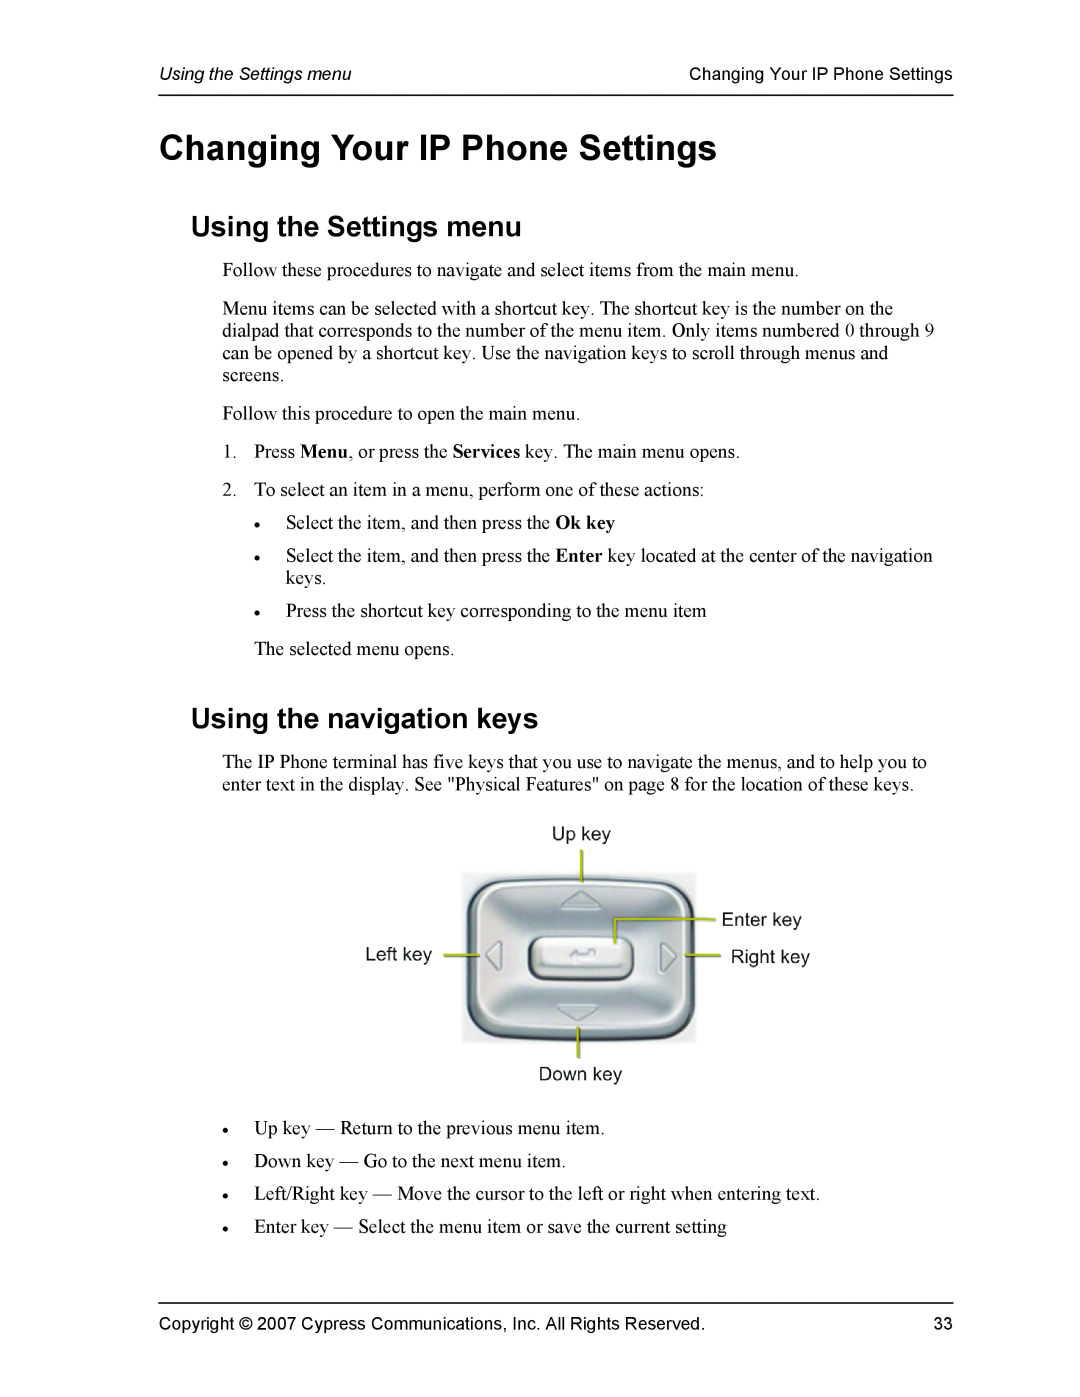 DeWalt 1140 manual Changing Your IP Phone Settings, Using the Settings menu, Using the navigation keys 